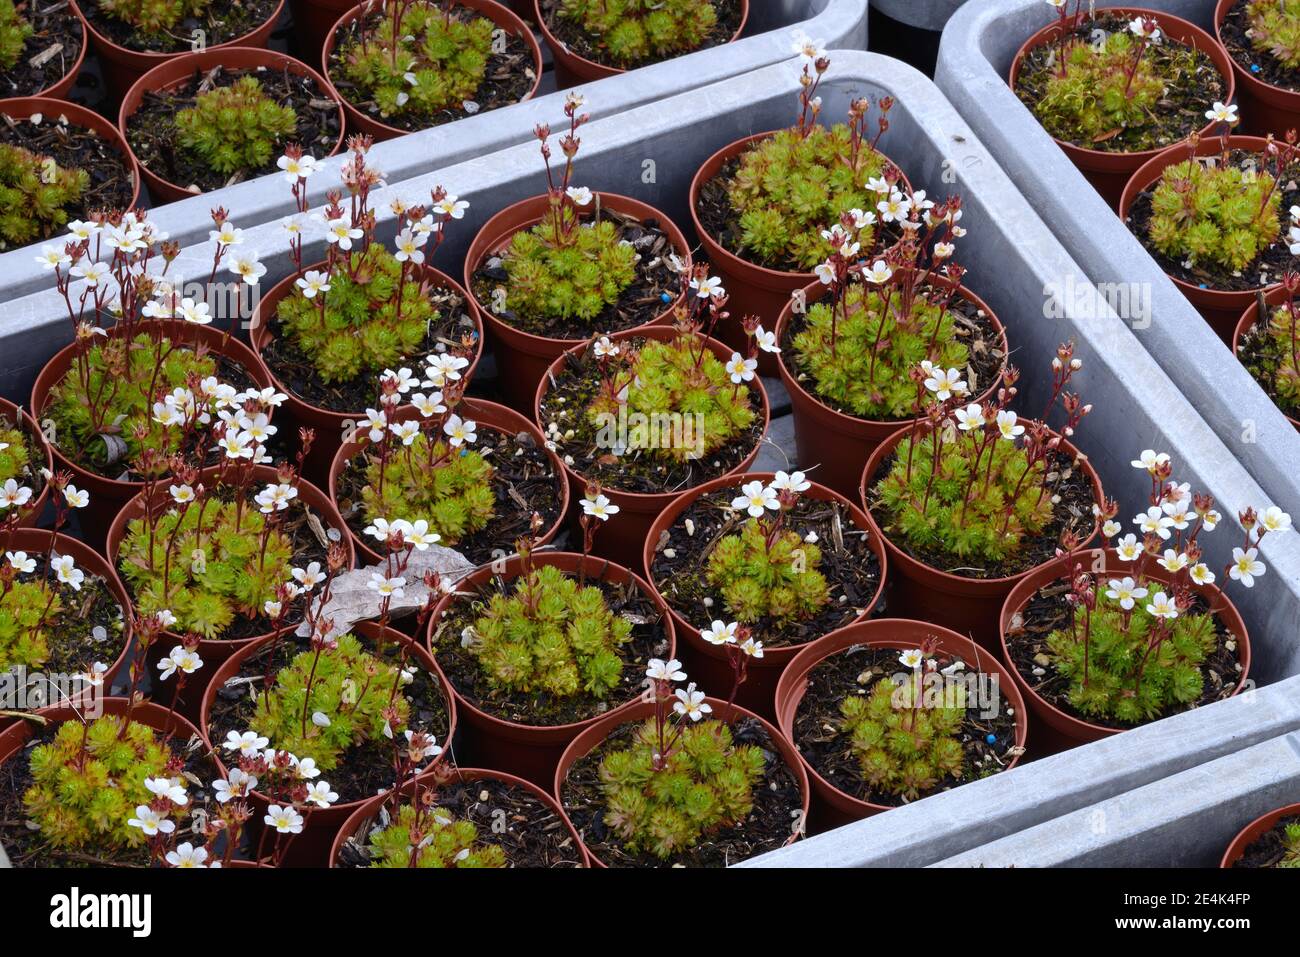 Saxifrage, Moss saxifrage, Saxifraga arendsii Alba, cultivation Stock Photo